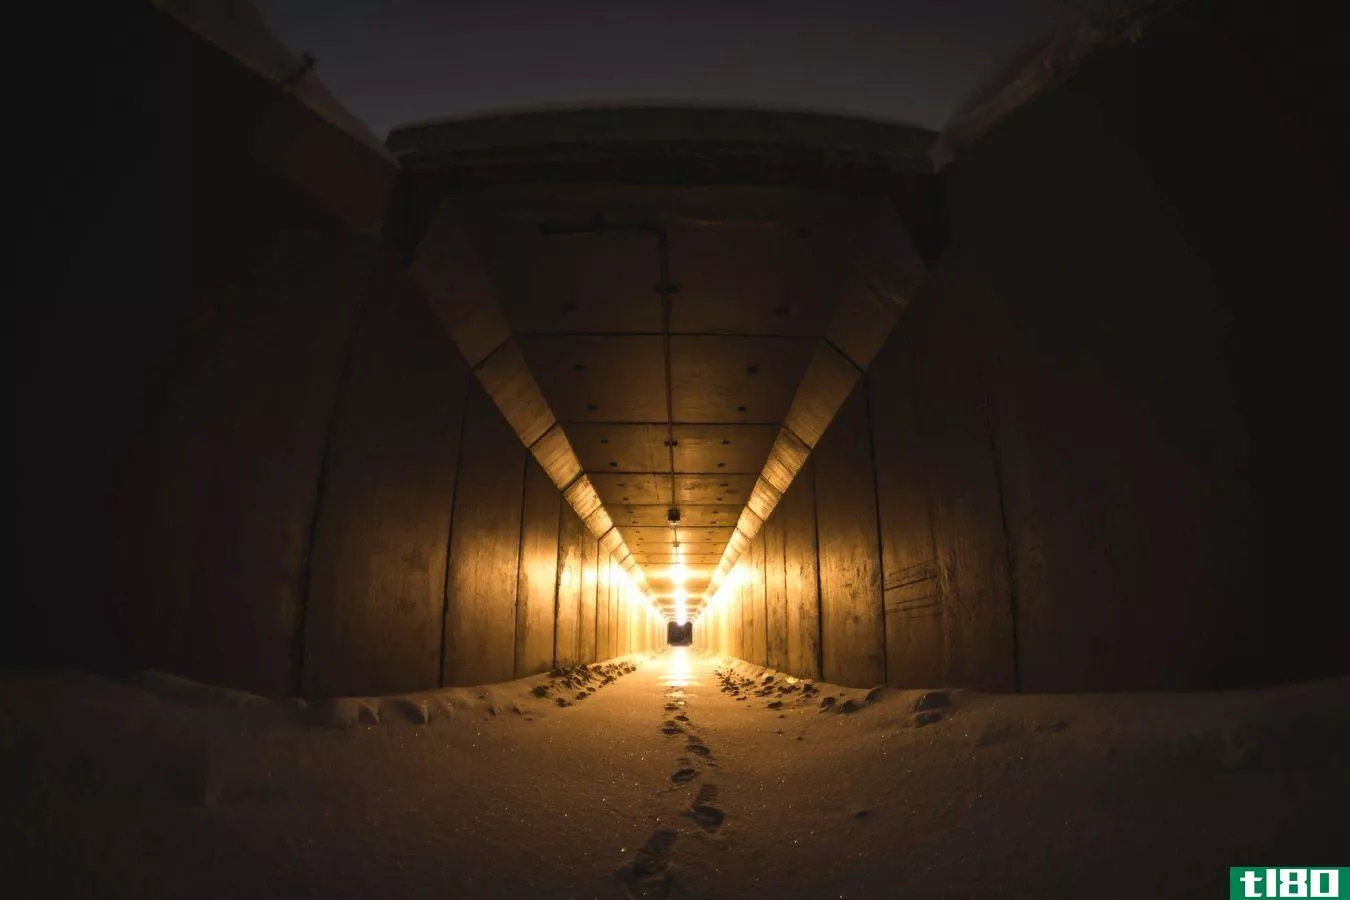 footprints on a dark snow covered path